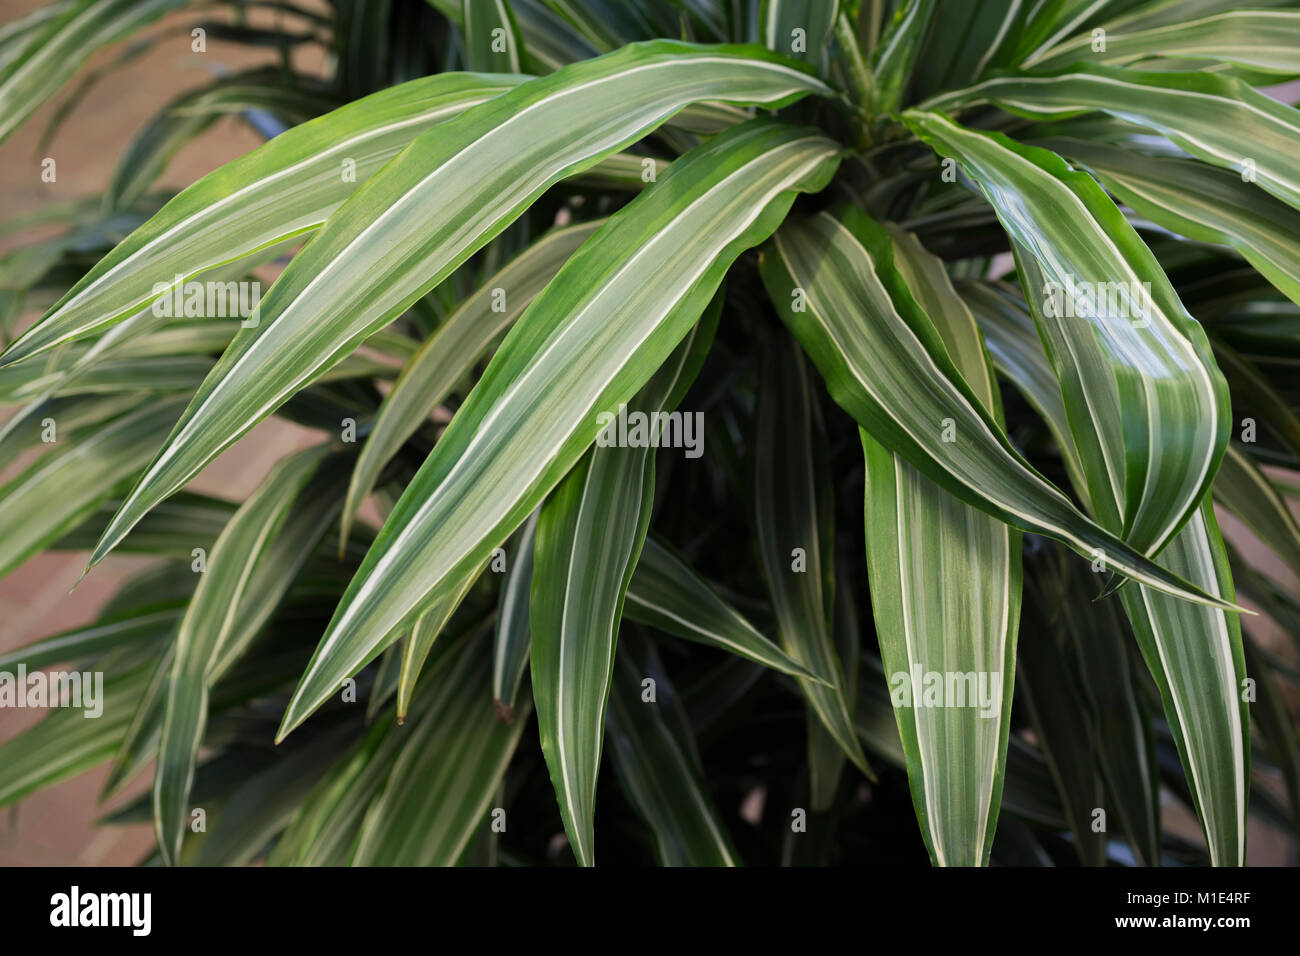 Dracaena deremensis 'Warneckii' Stock Photo